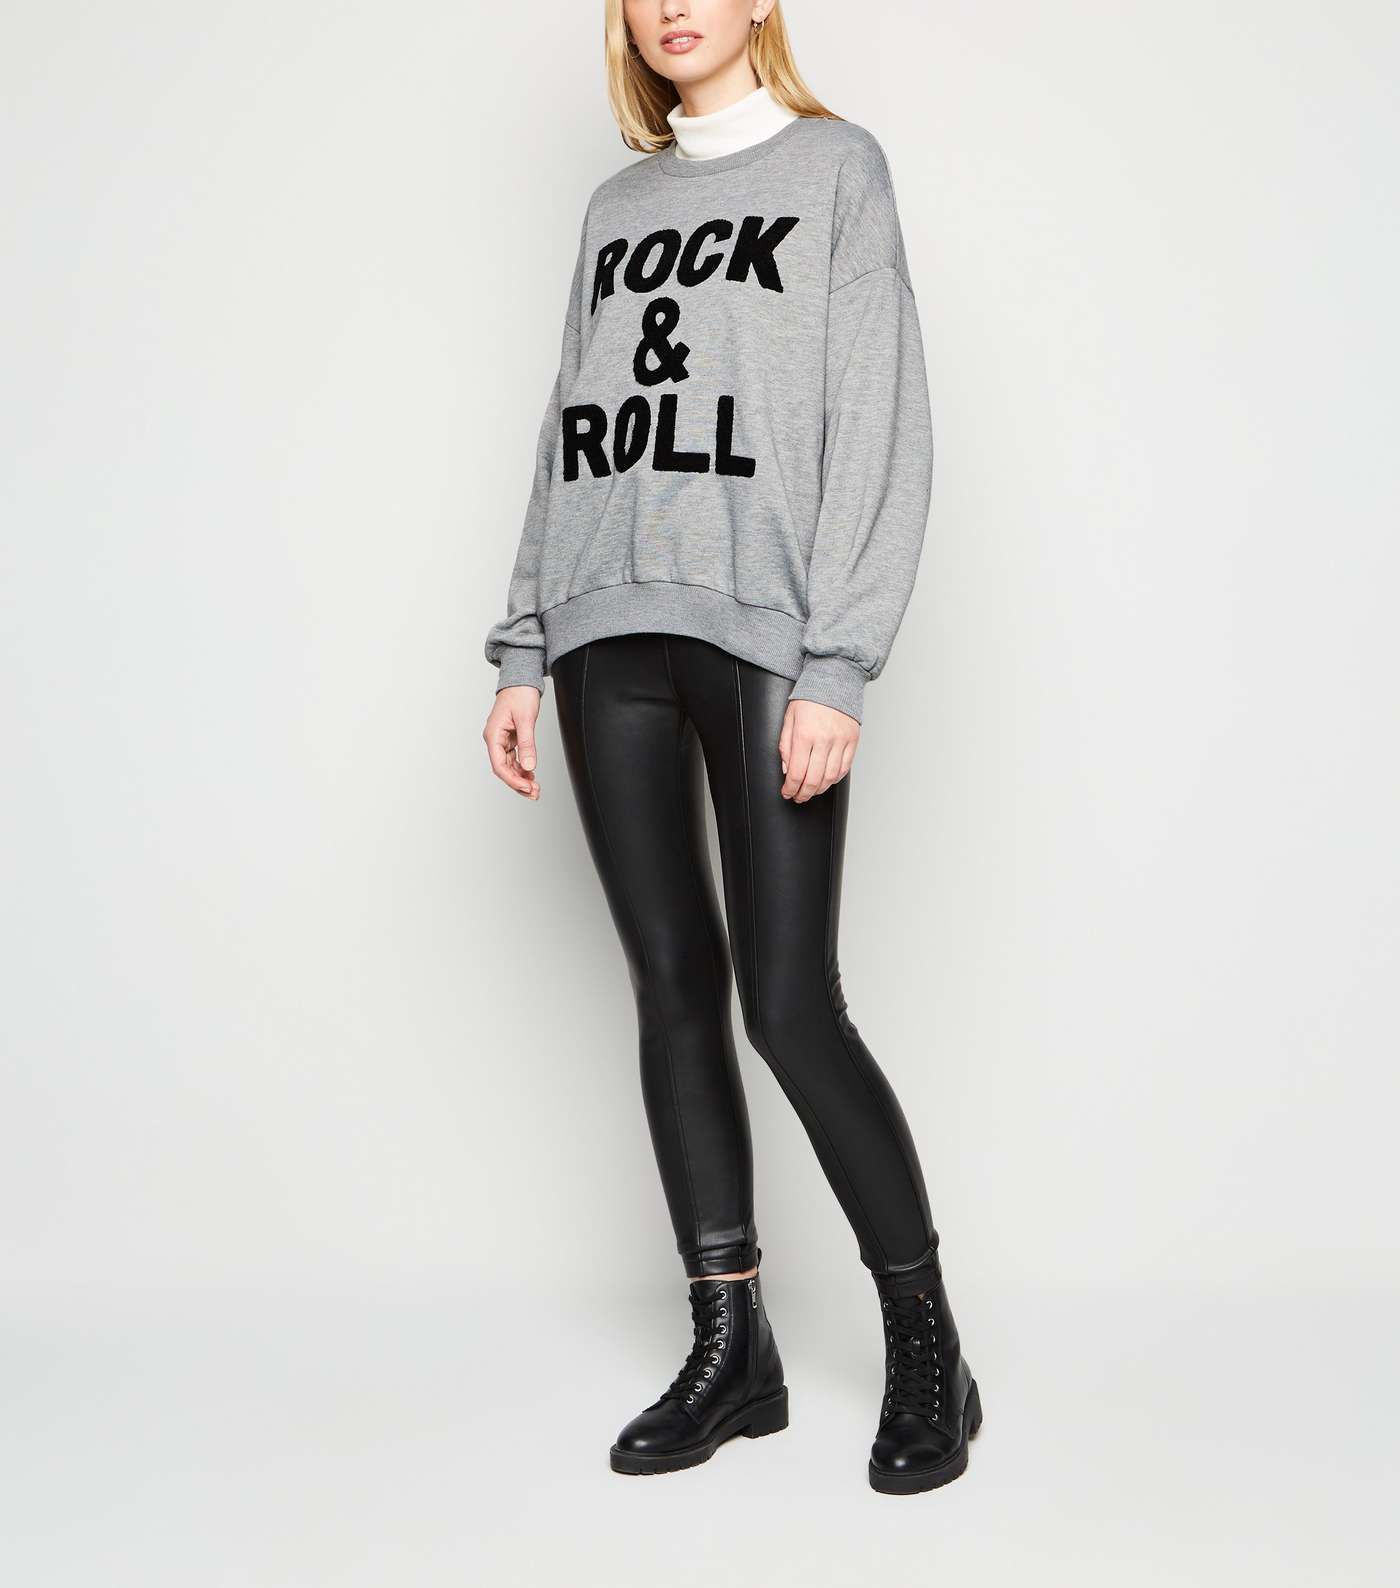 Cameo Rose Grey Rock & Roll Slogan Sweatshirt Image 2